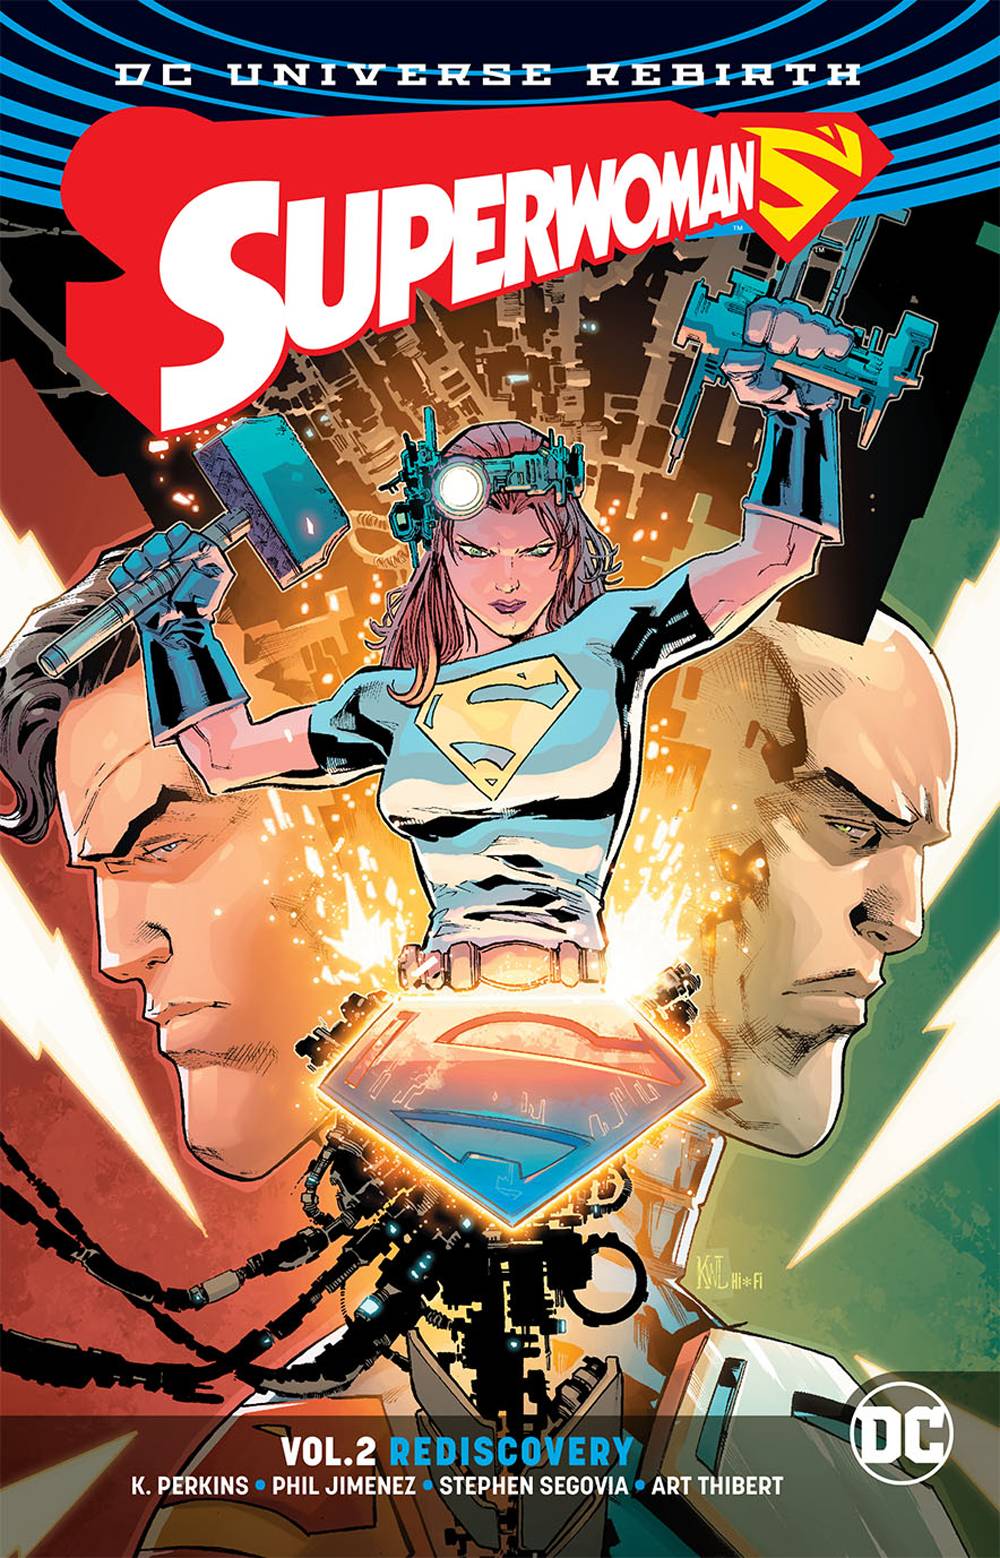 Superwoman Graphic Novel Volume 2 Rediscovery (Rebirth)